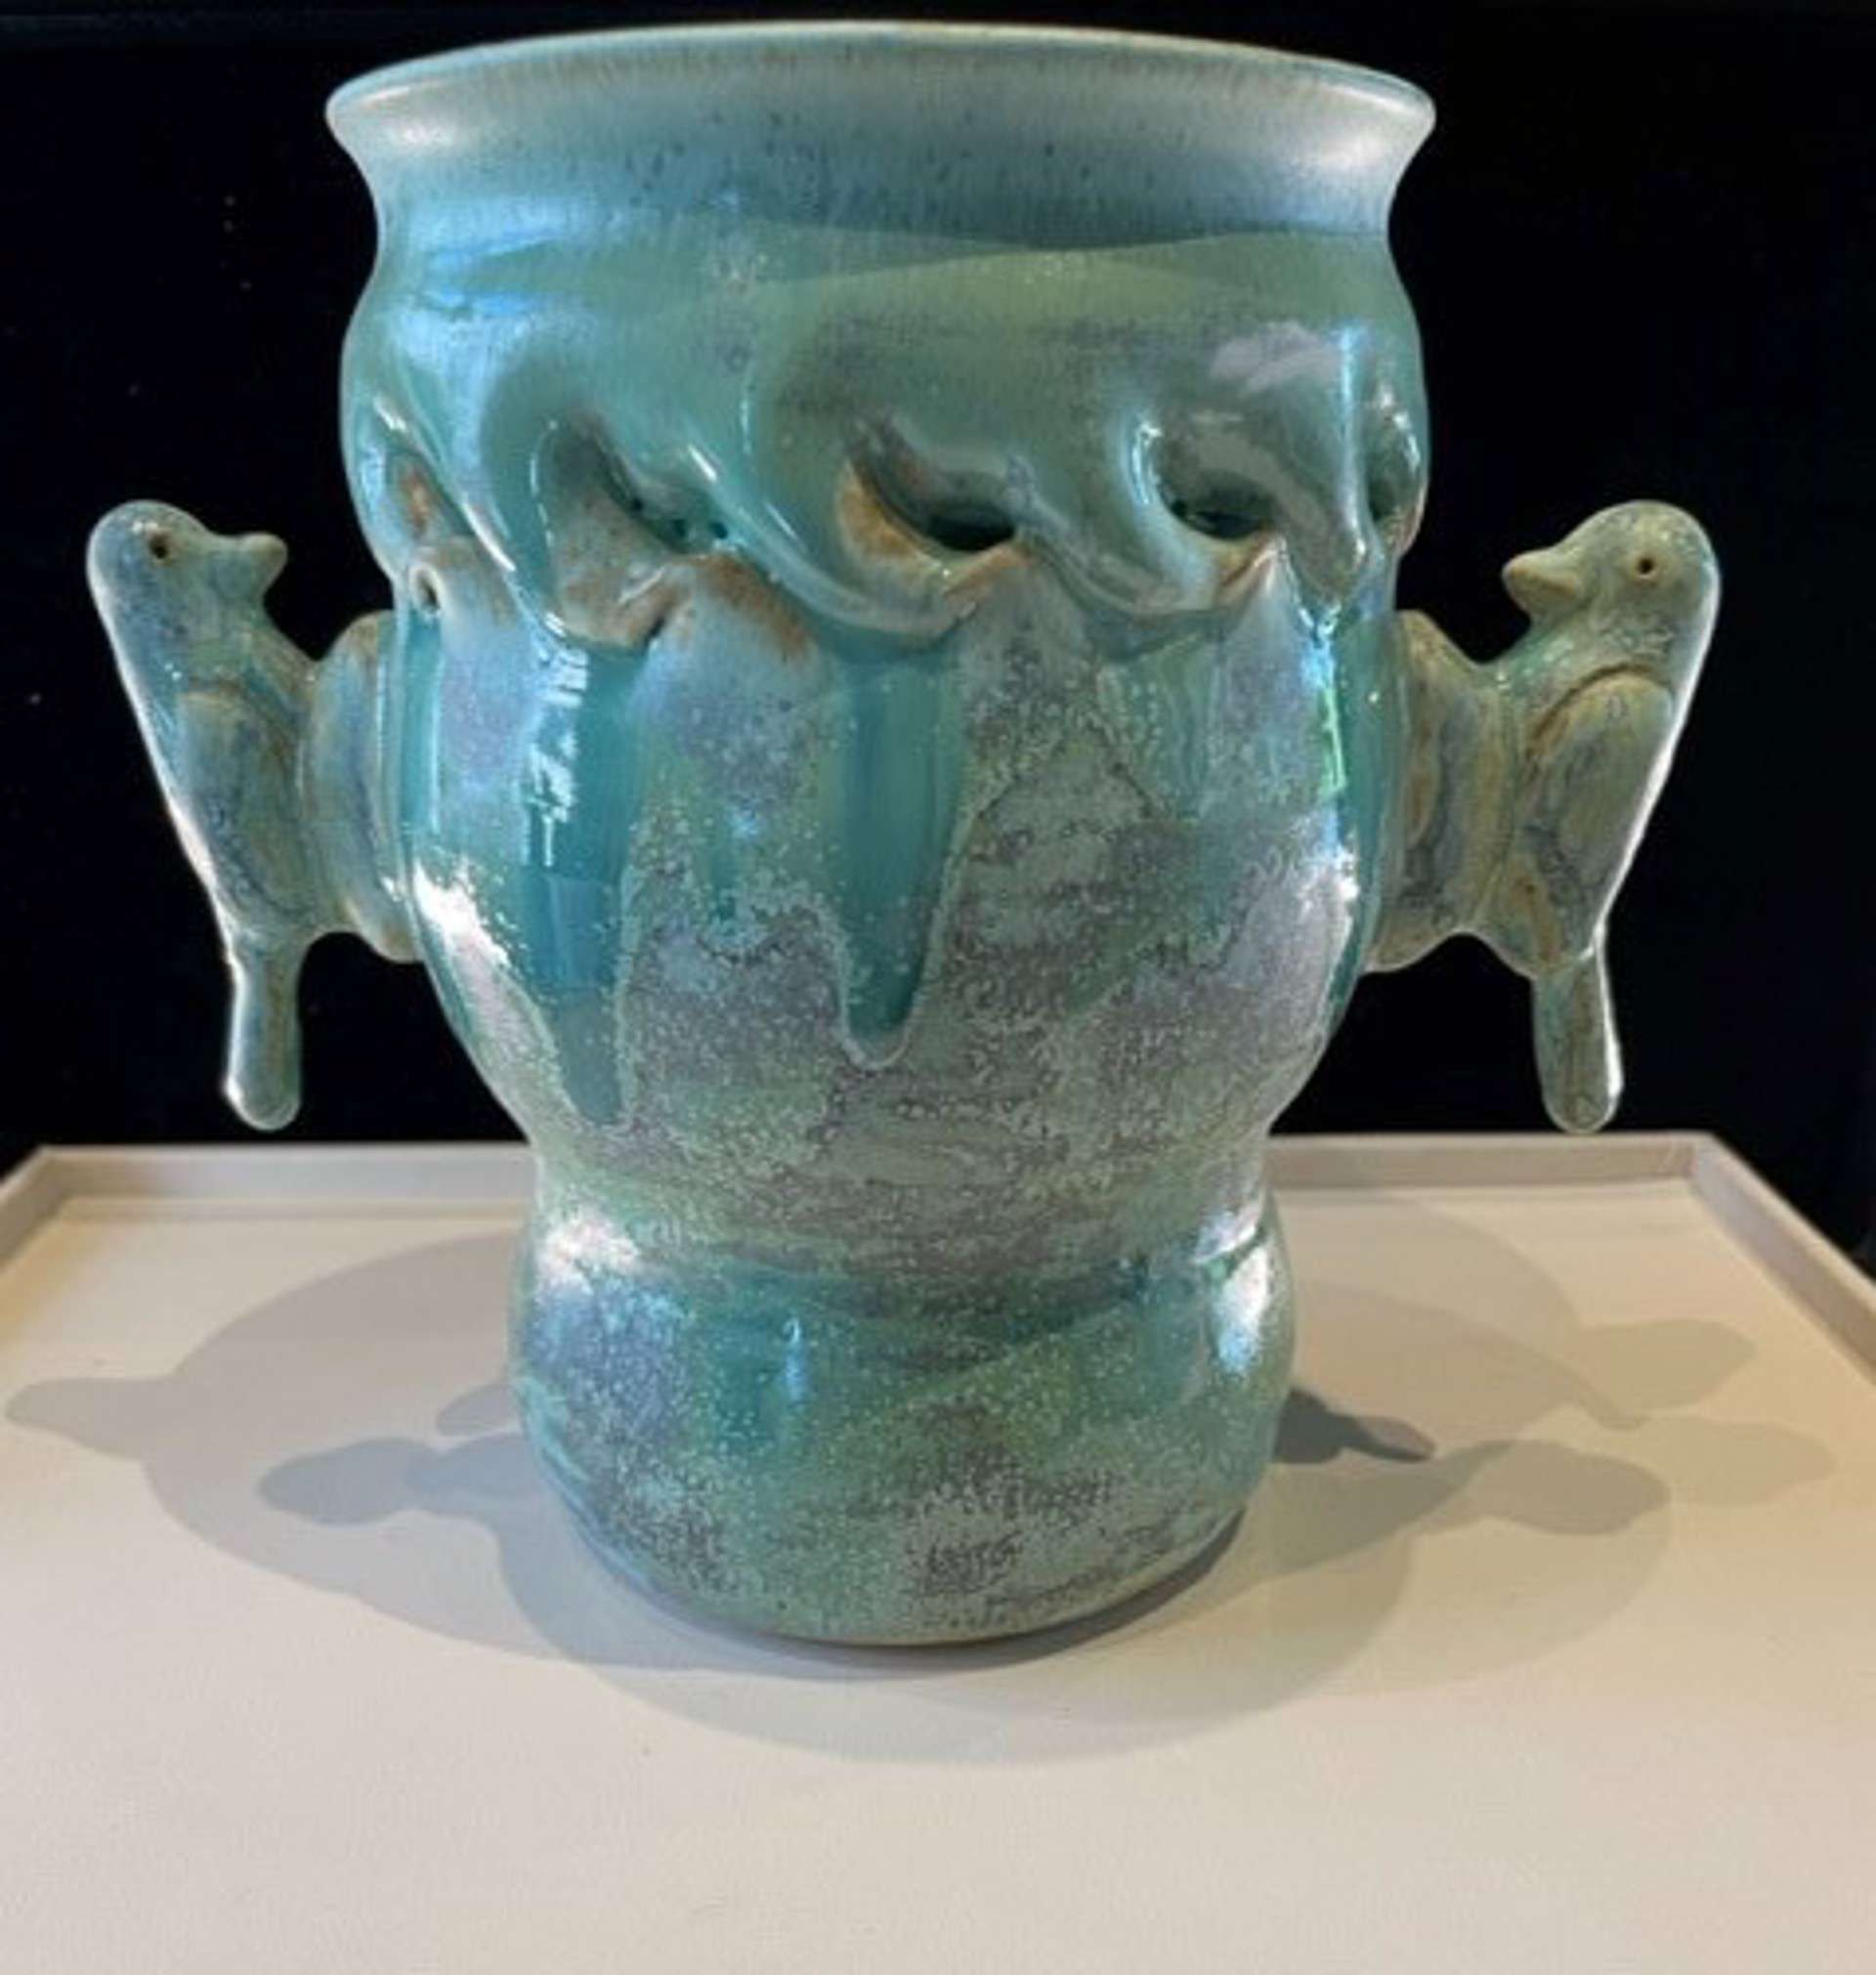 Clarkhouse #93 Mint green folded vase with bird handles by Bill & Pam Clark Clark House Pottery